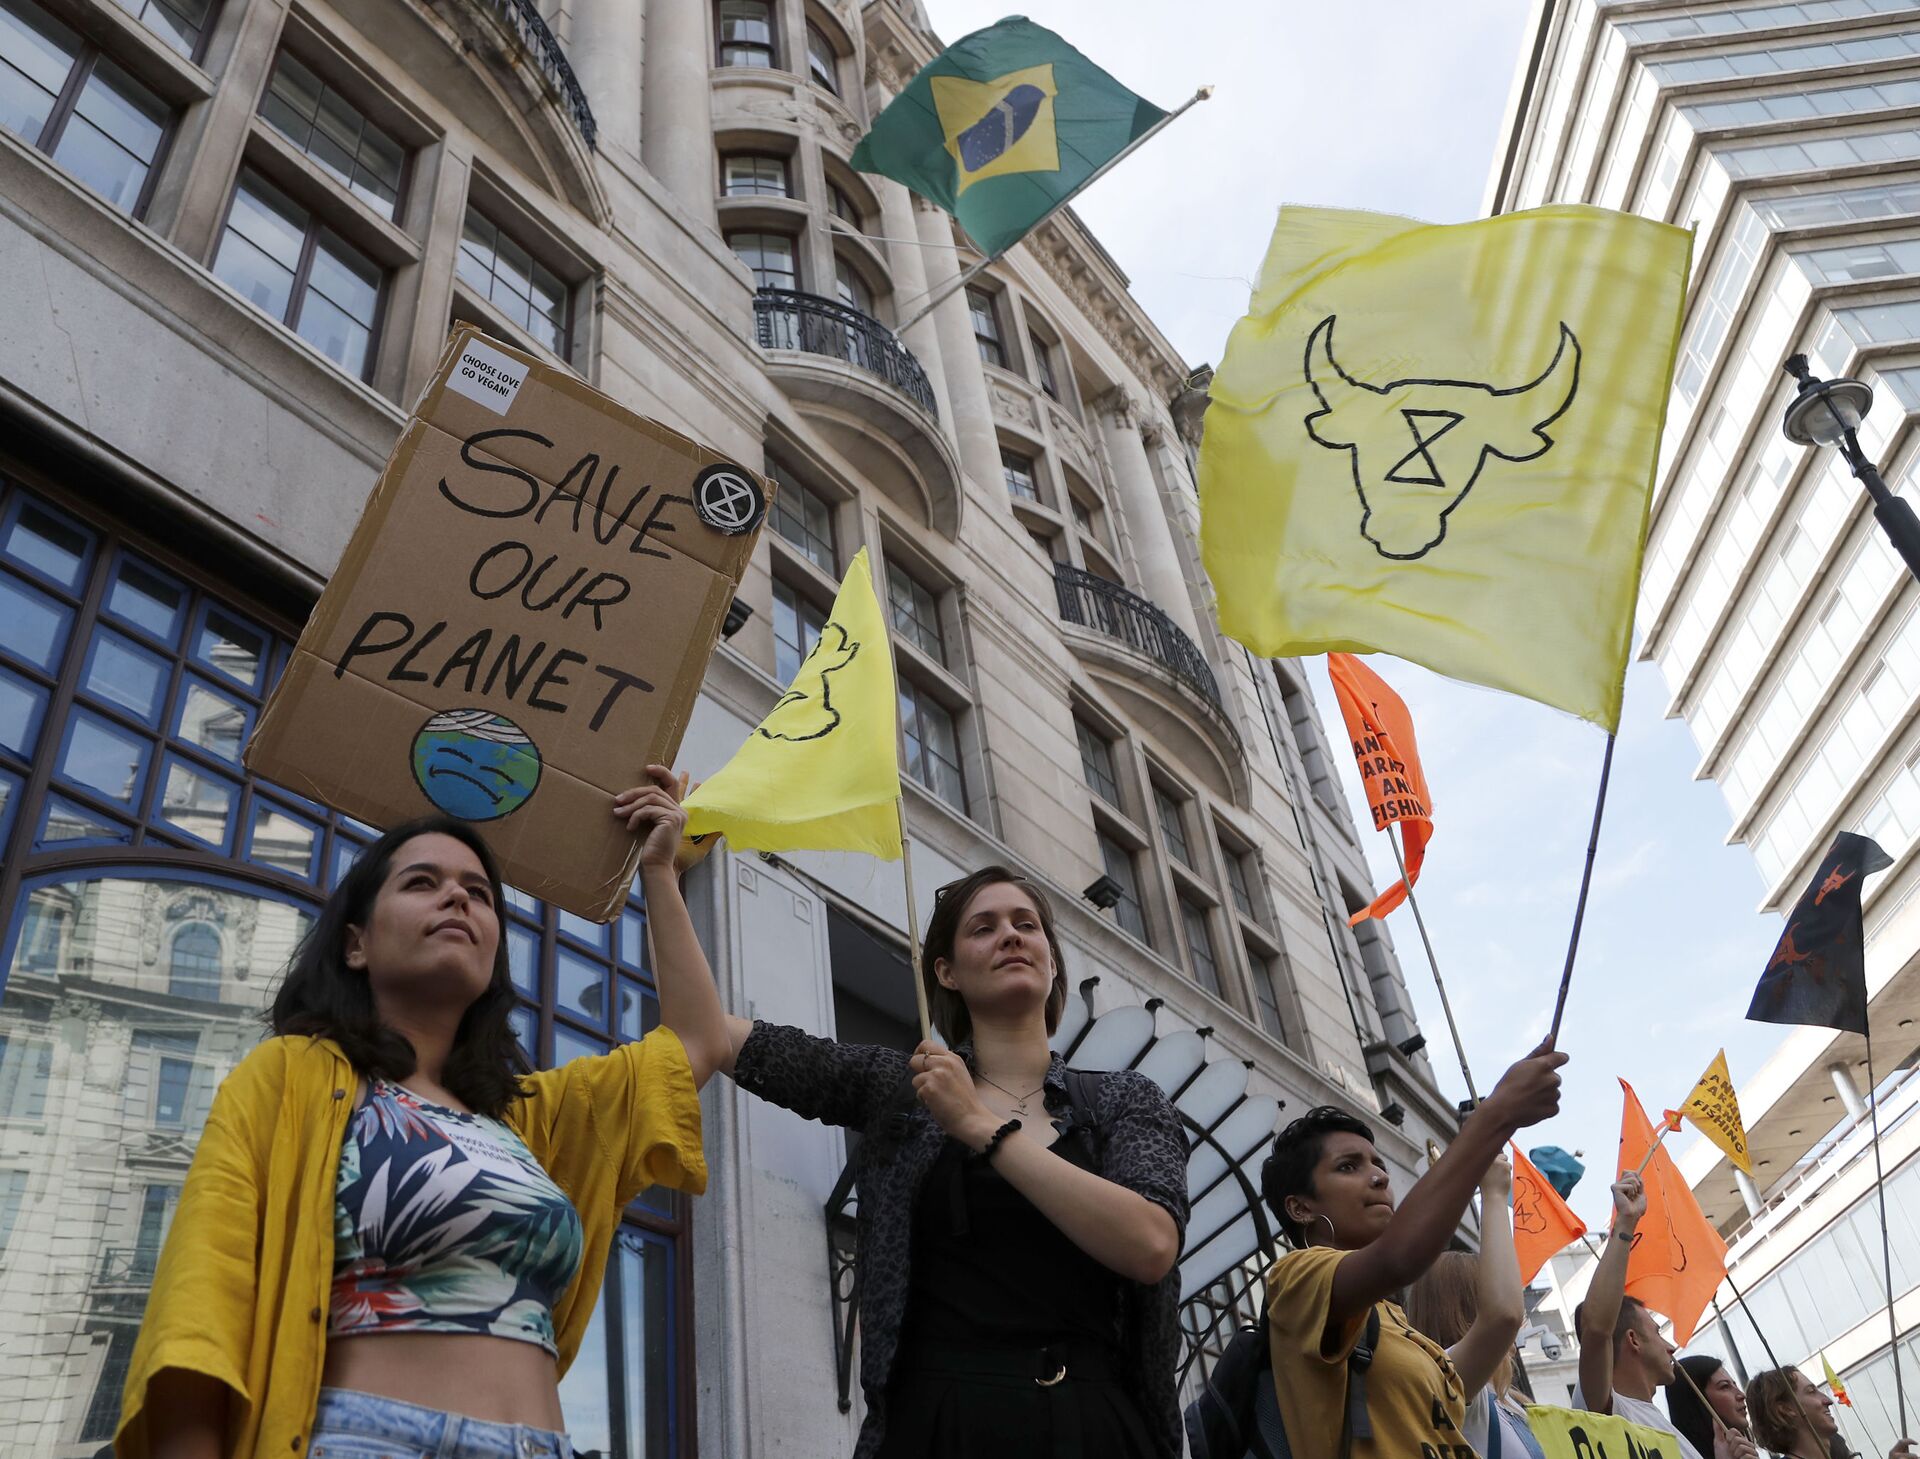 Brasil deve se preparar para sanções e embargos com justificativa ambiental, alerta especialista  - Sputnik Brasil, 1920, 23.02.2021